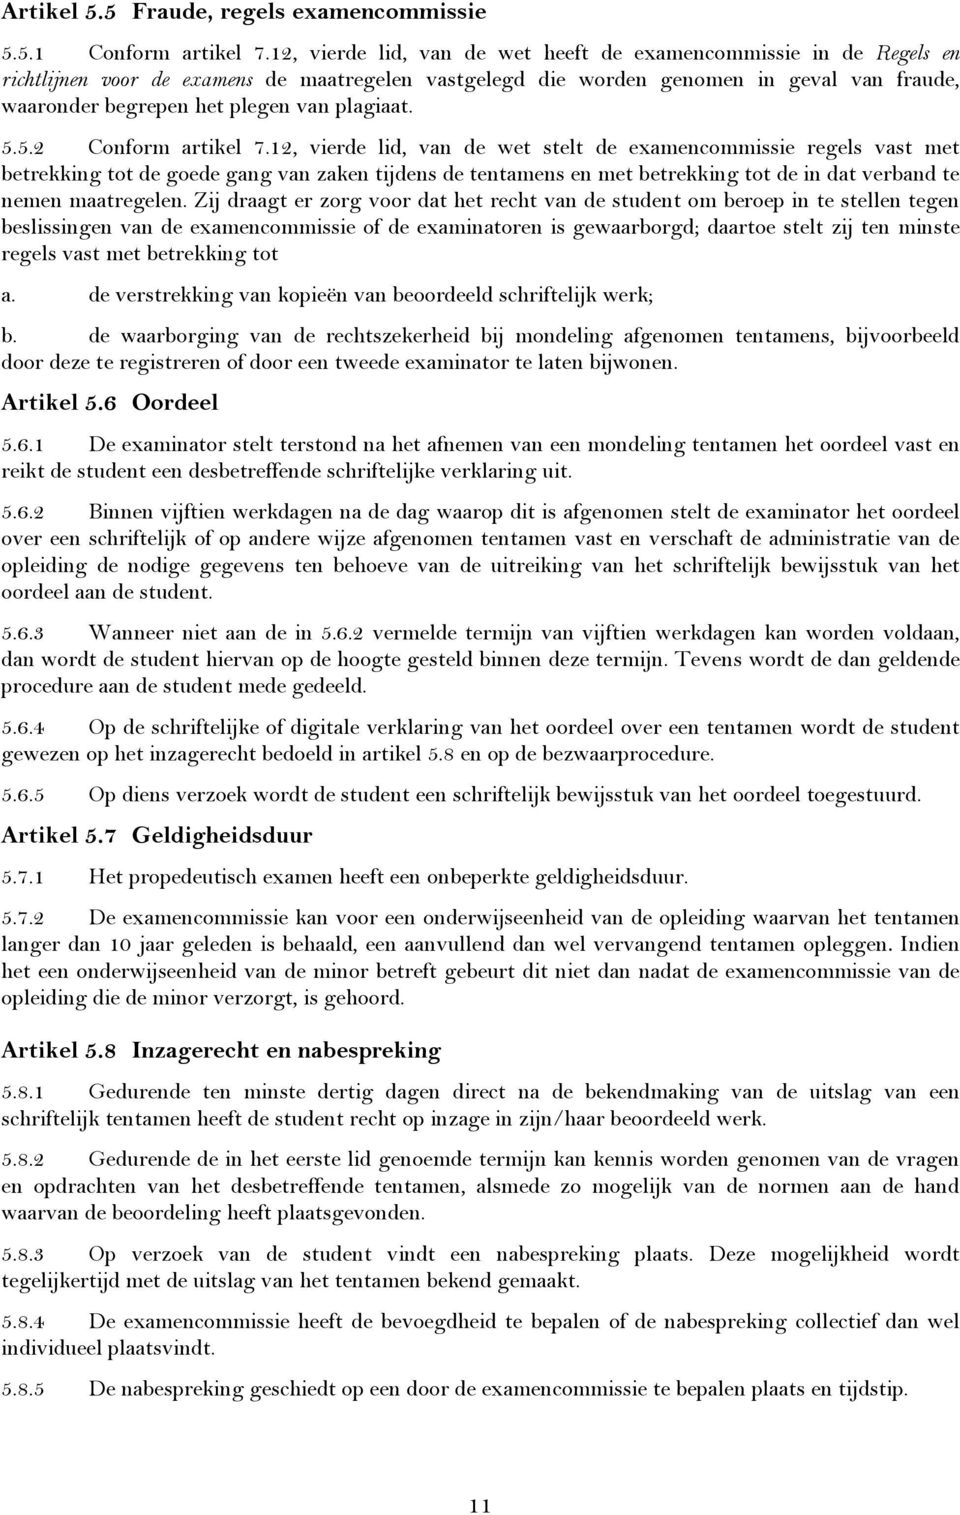 plagiaat. 5.5.2 Conform artikel 7.